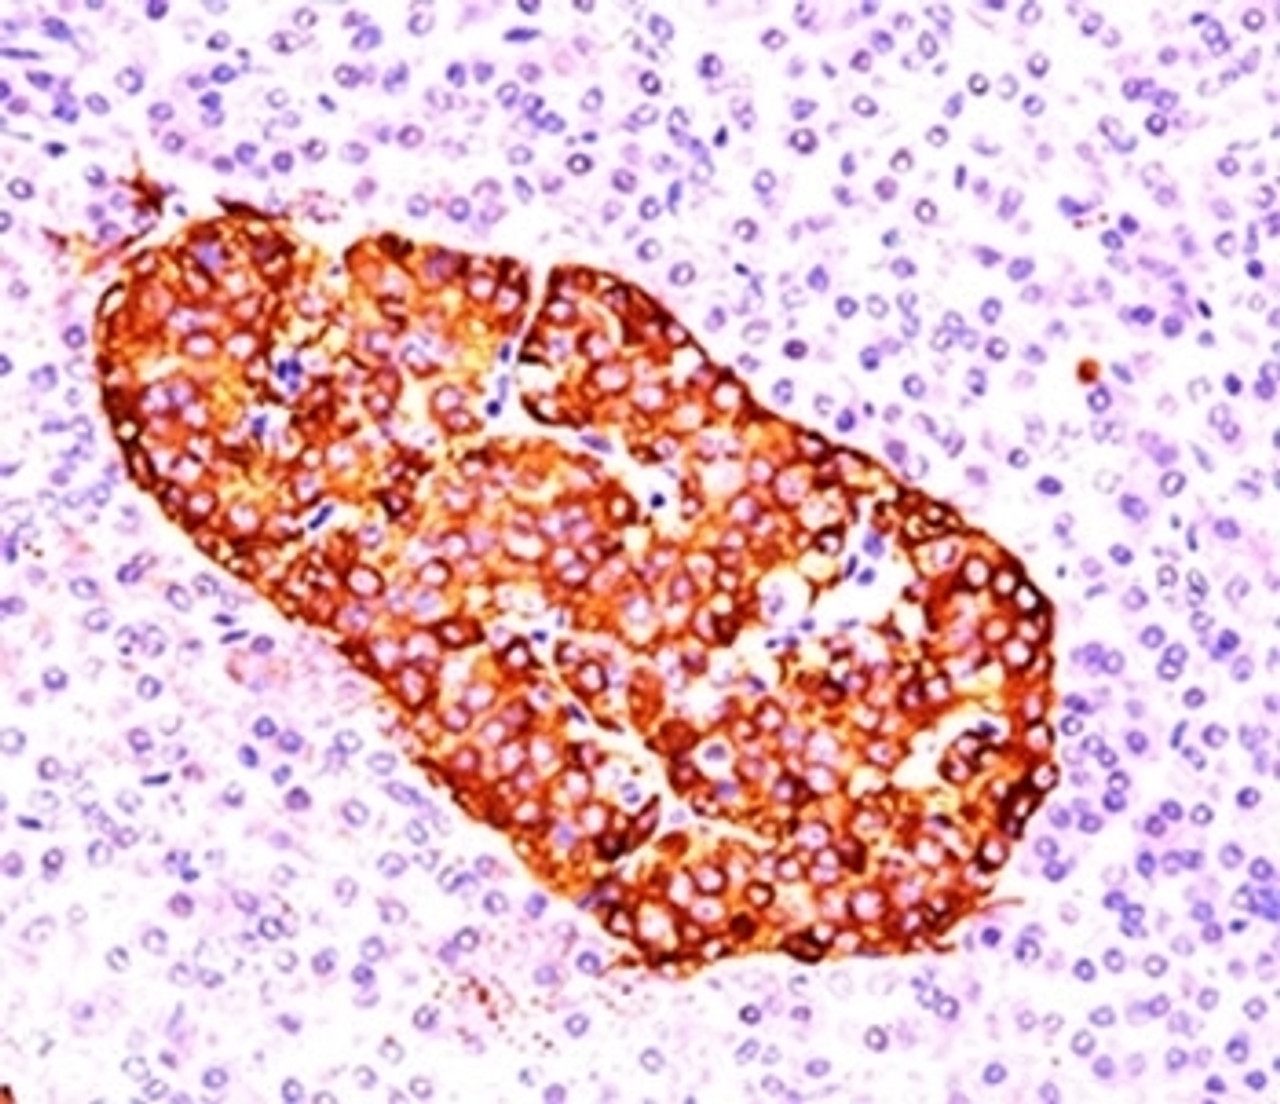 IHC testing of pancreas stained with chromogranin A antibody (CGA414) .